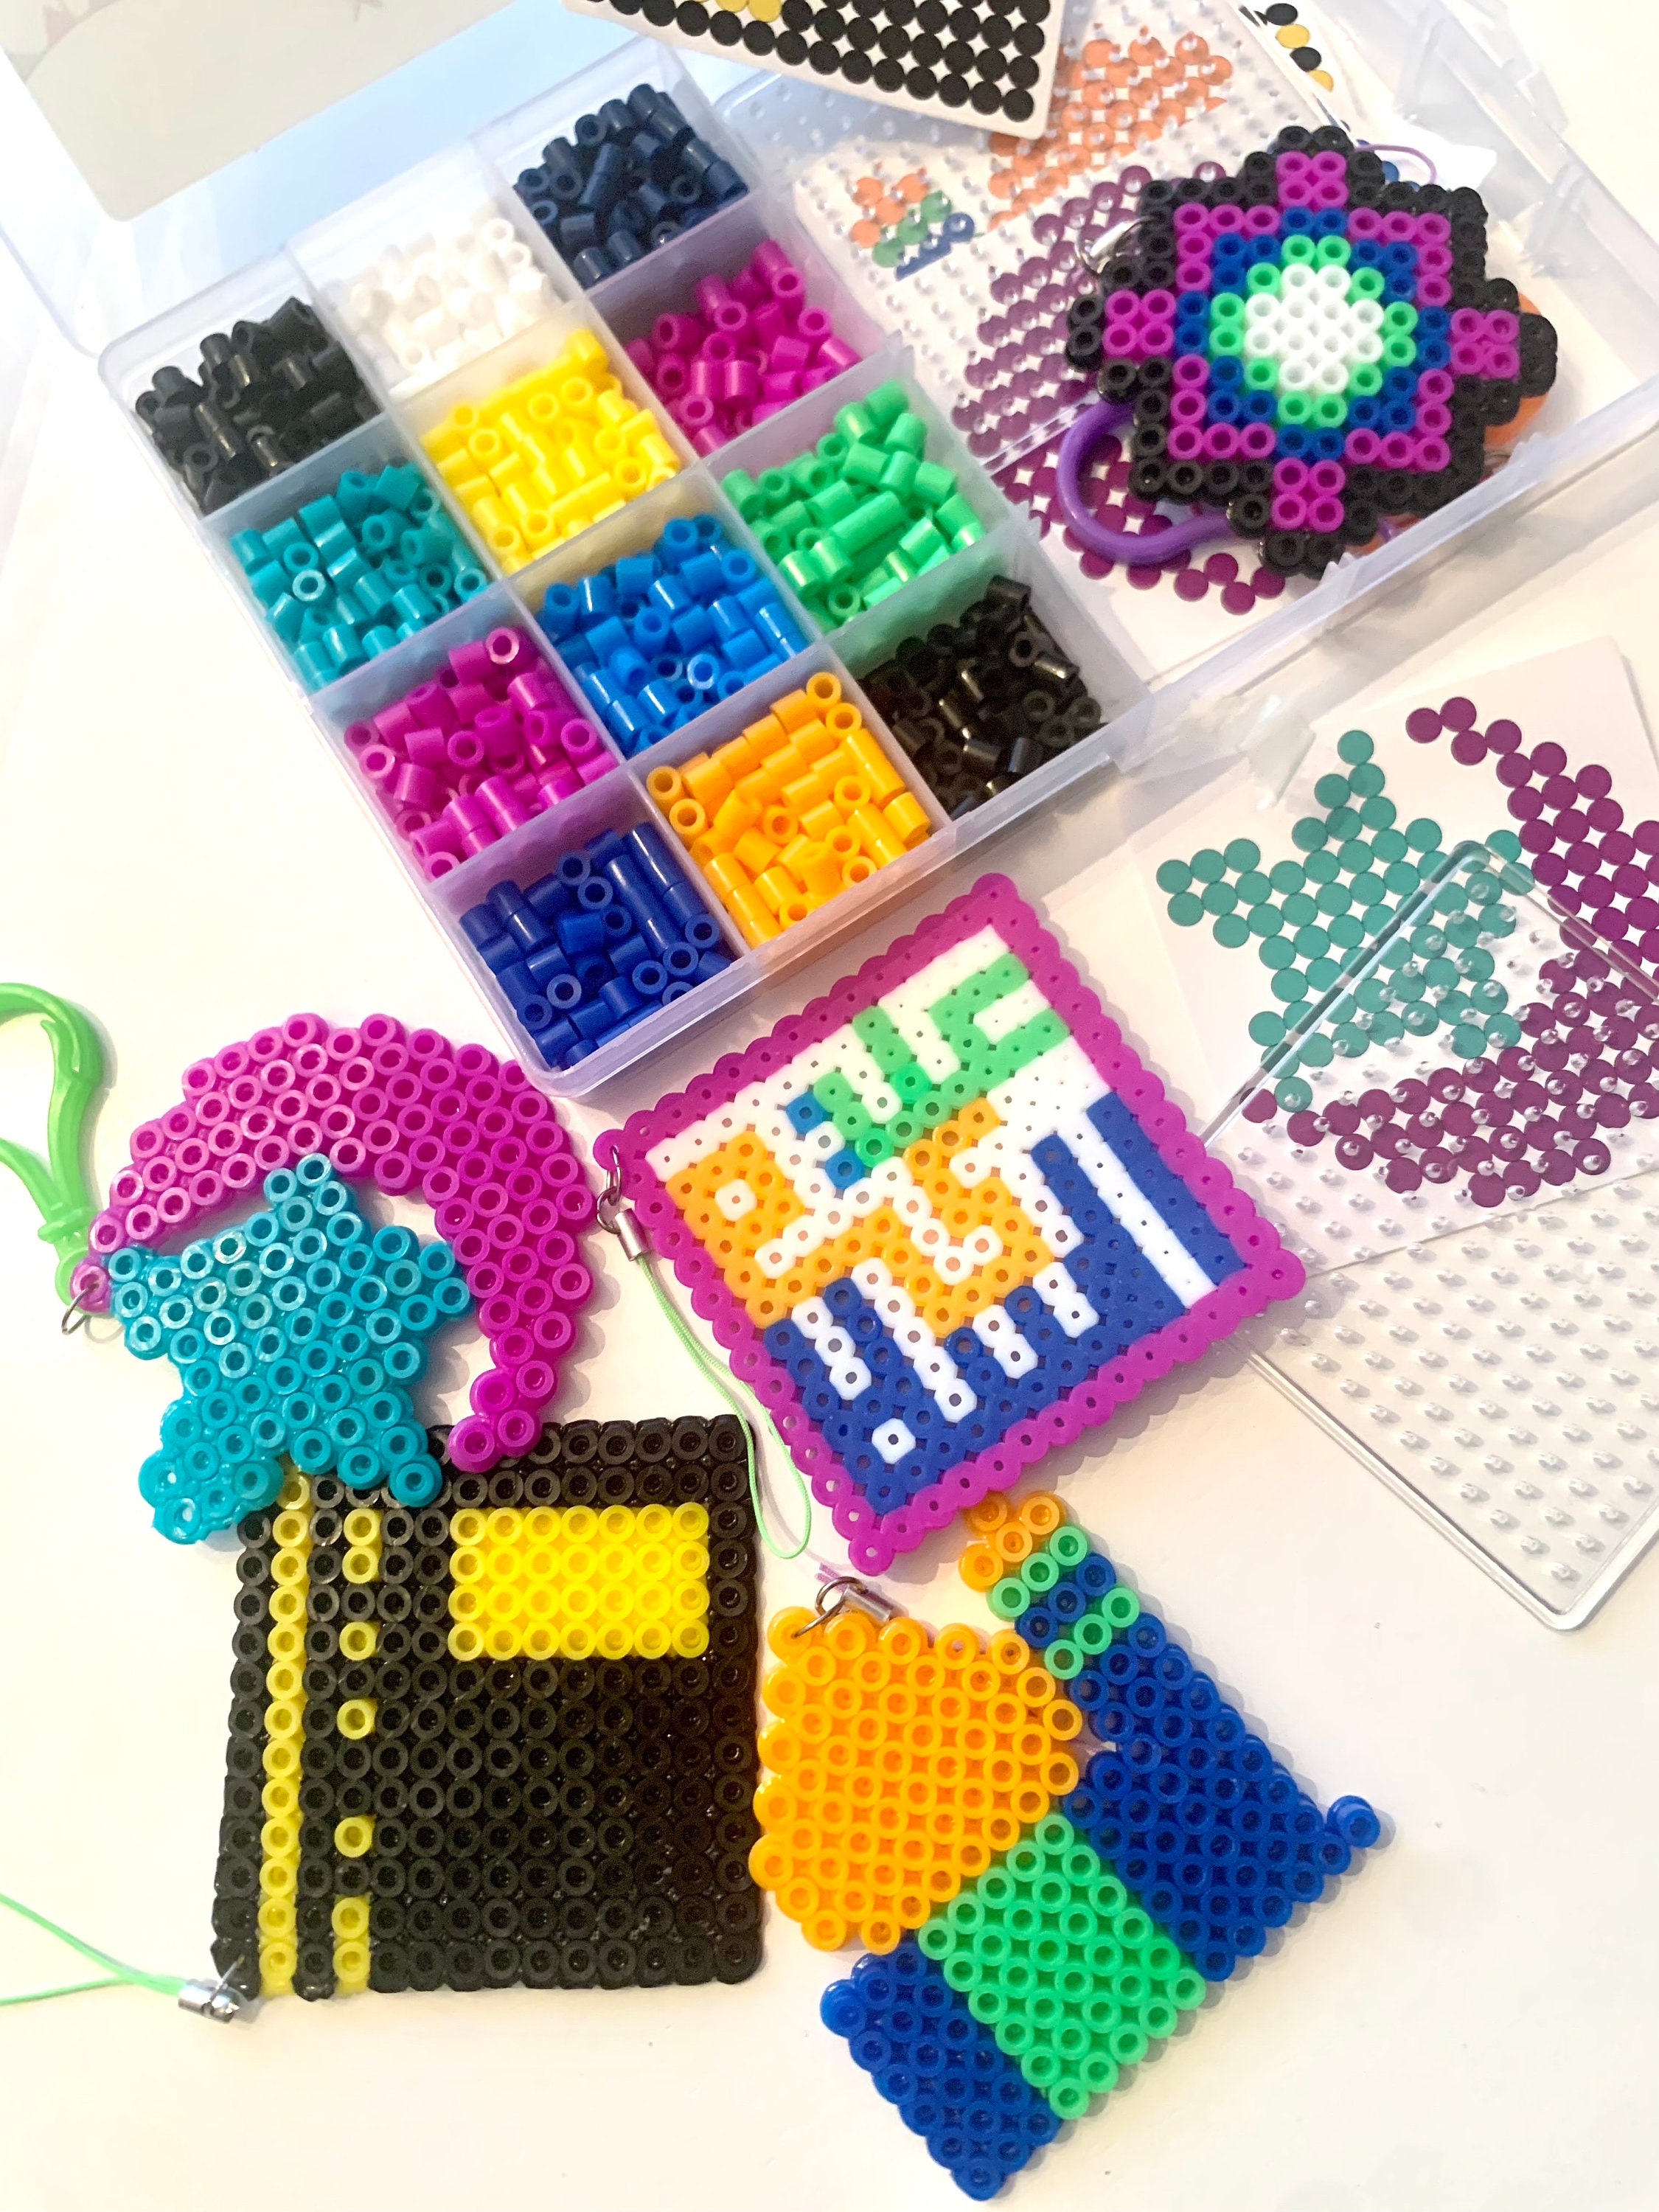 DIY Minecraft Perler Bead Kits New Designs Just Added 